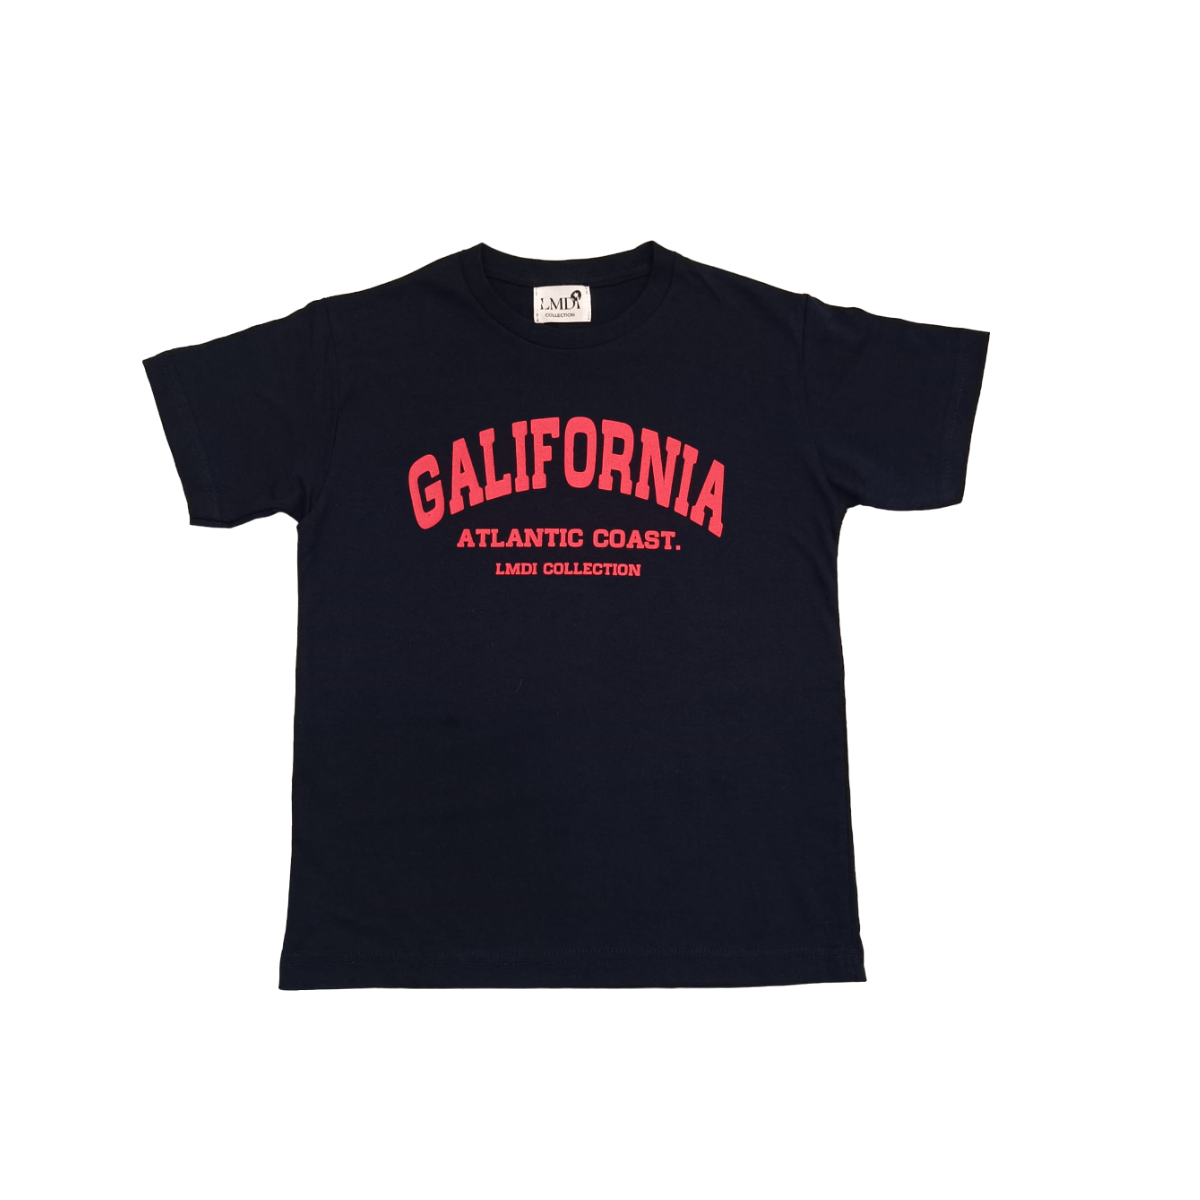 Camiseta Galifornia Atlantic Coast LMDI Collection KIDS marino